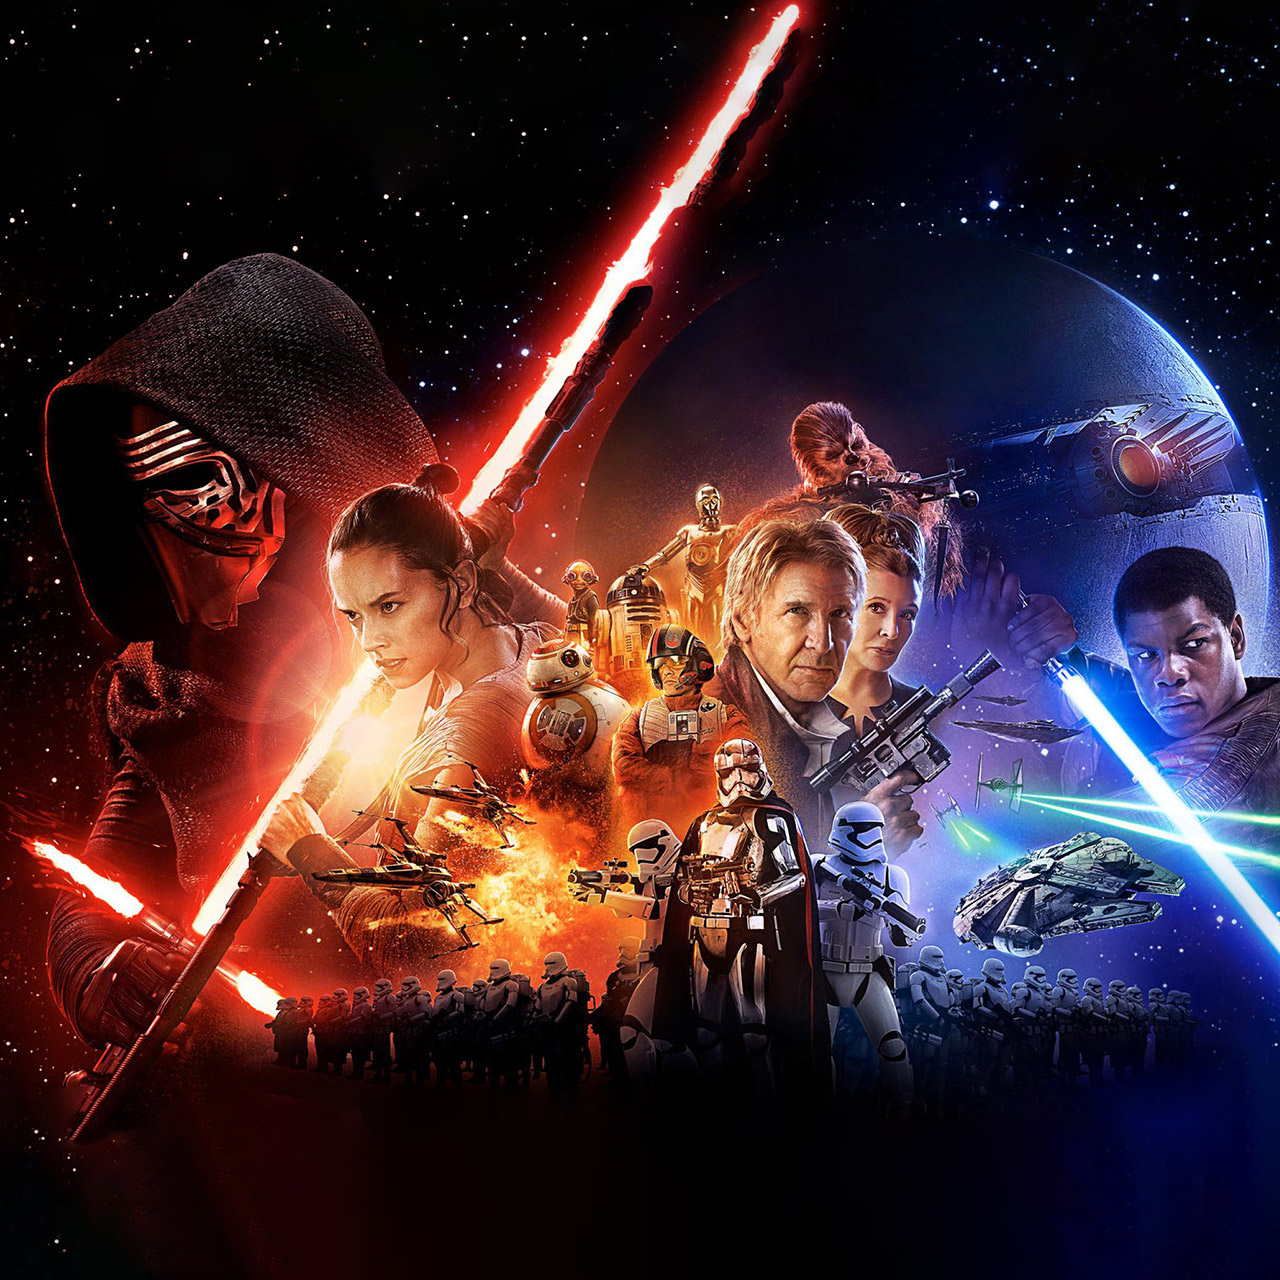 Star Wars The Force Awakens wallpaper